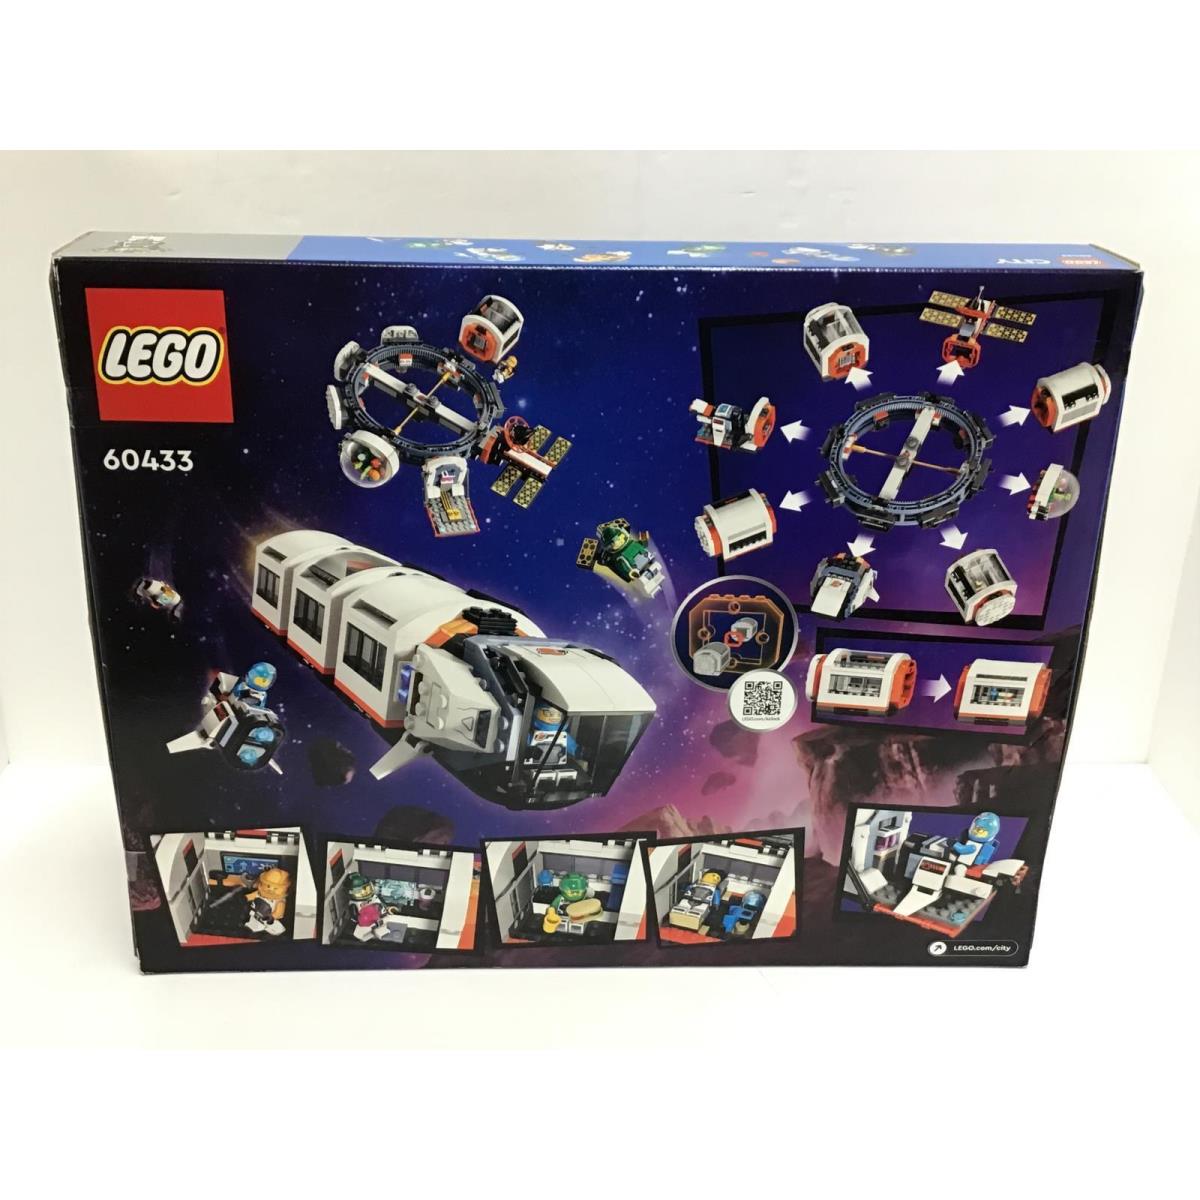 Lego 60433 Modular Space Station City 1097 Pcs Building Set 6470830